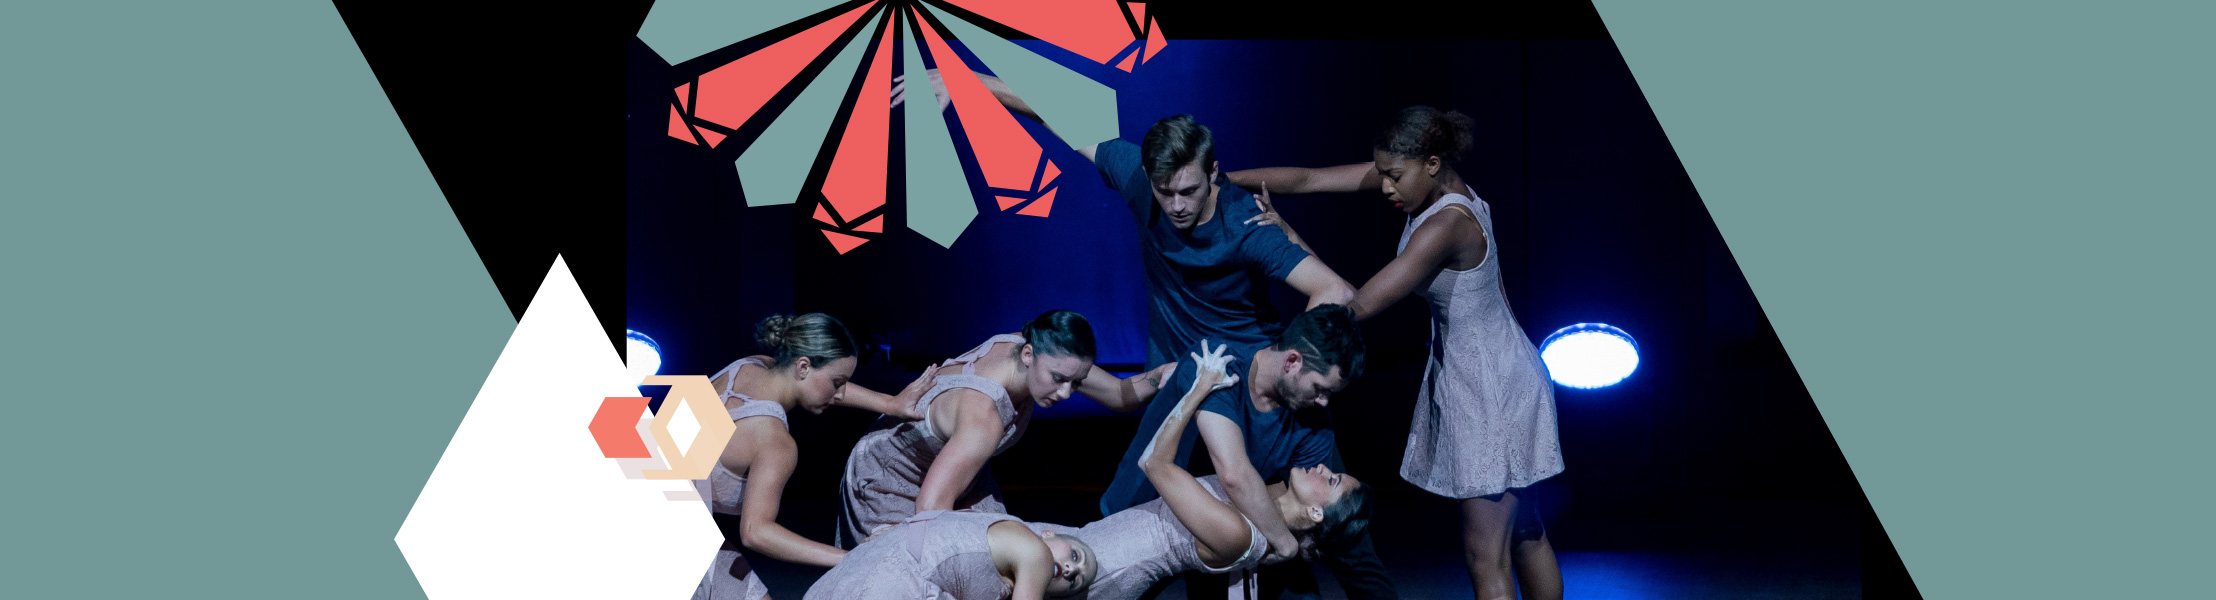 Houston Contemporary Dance Company - The Carver Season 2019-20